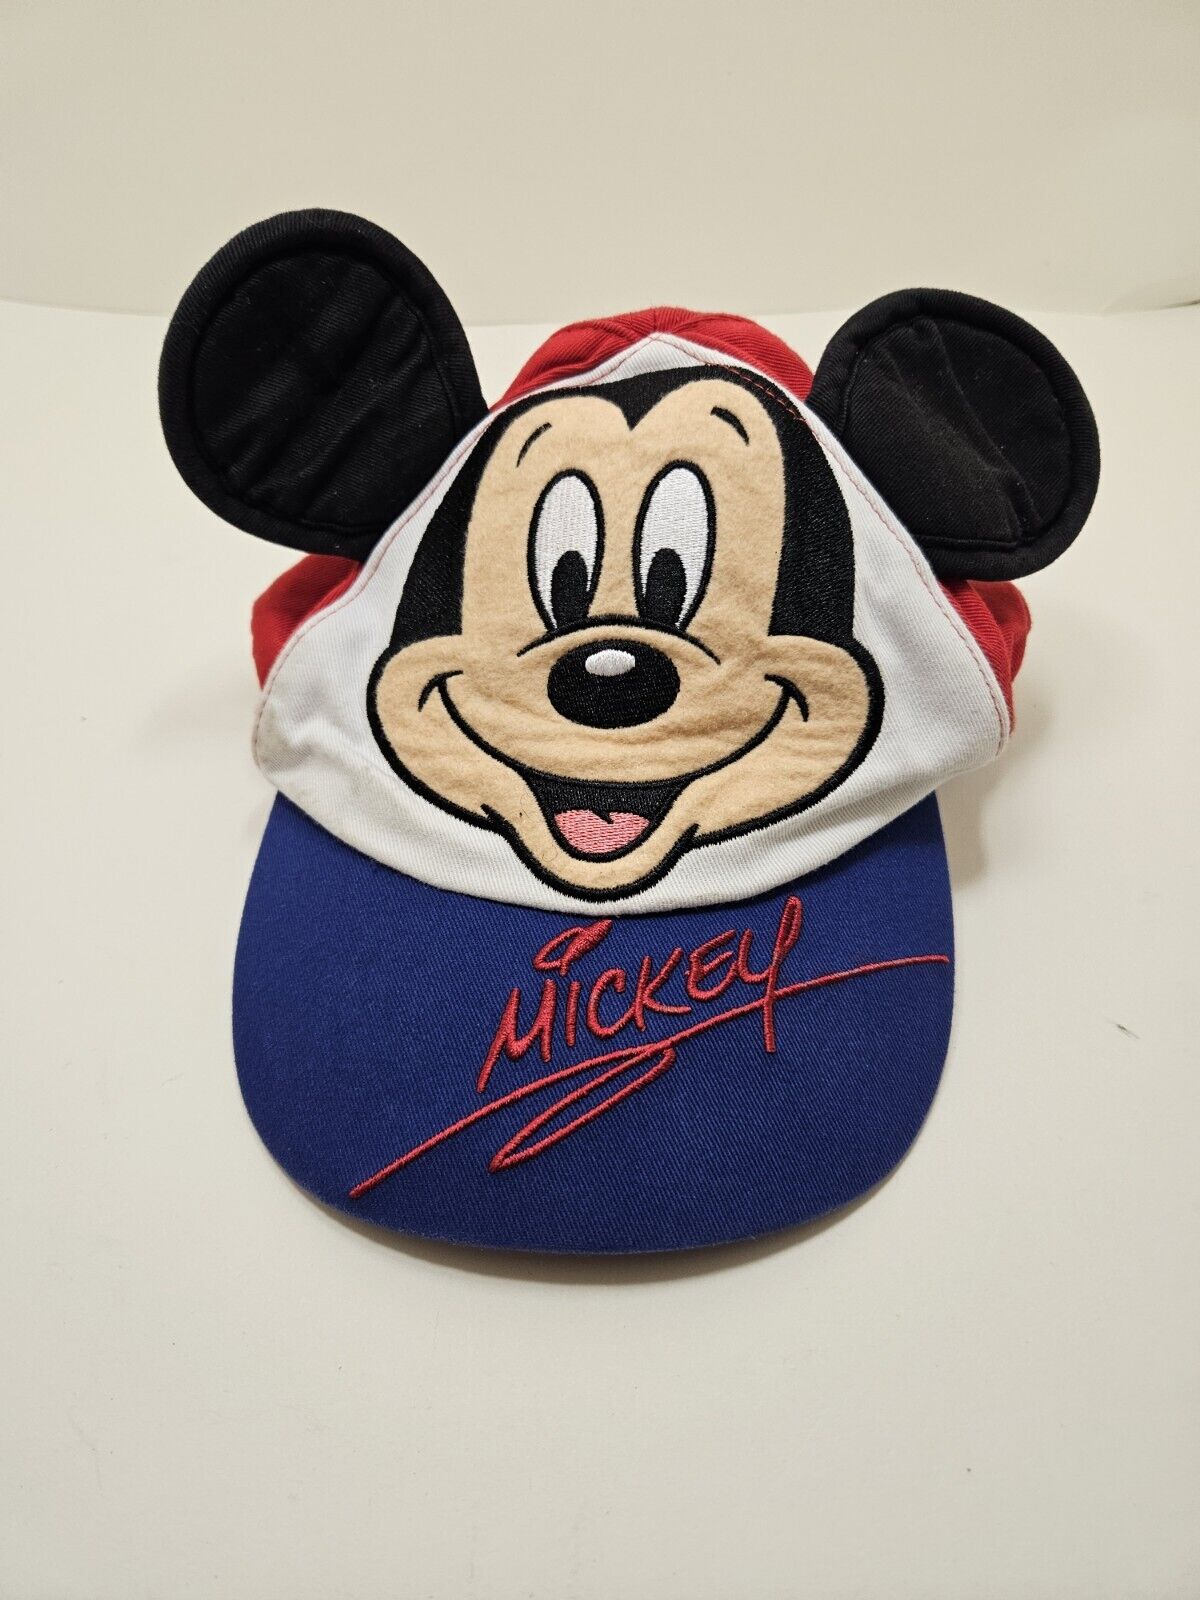 Disney Parks Authentic Original Disney Mickey Mouse Infant Hat